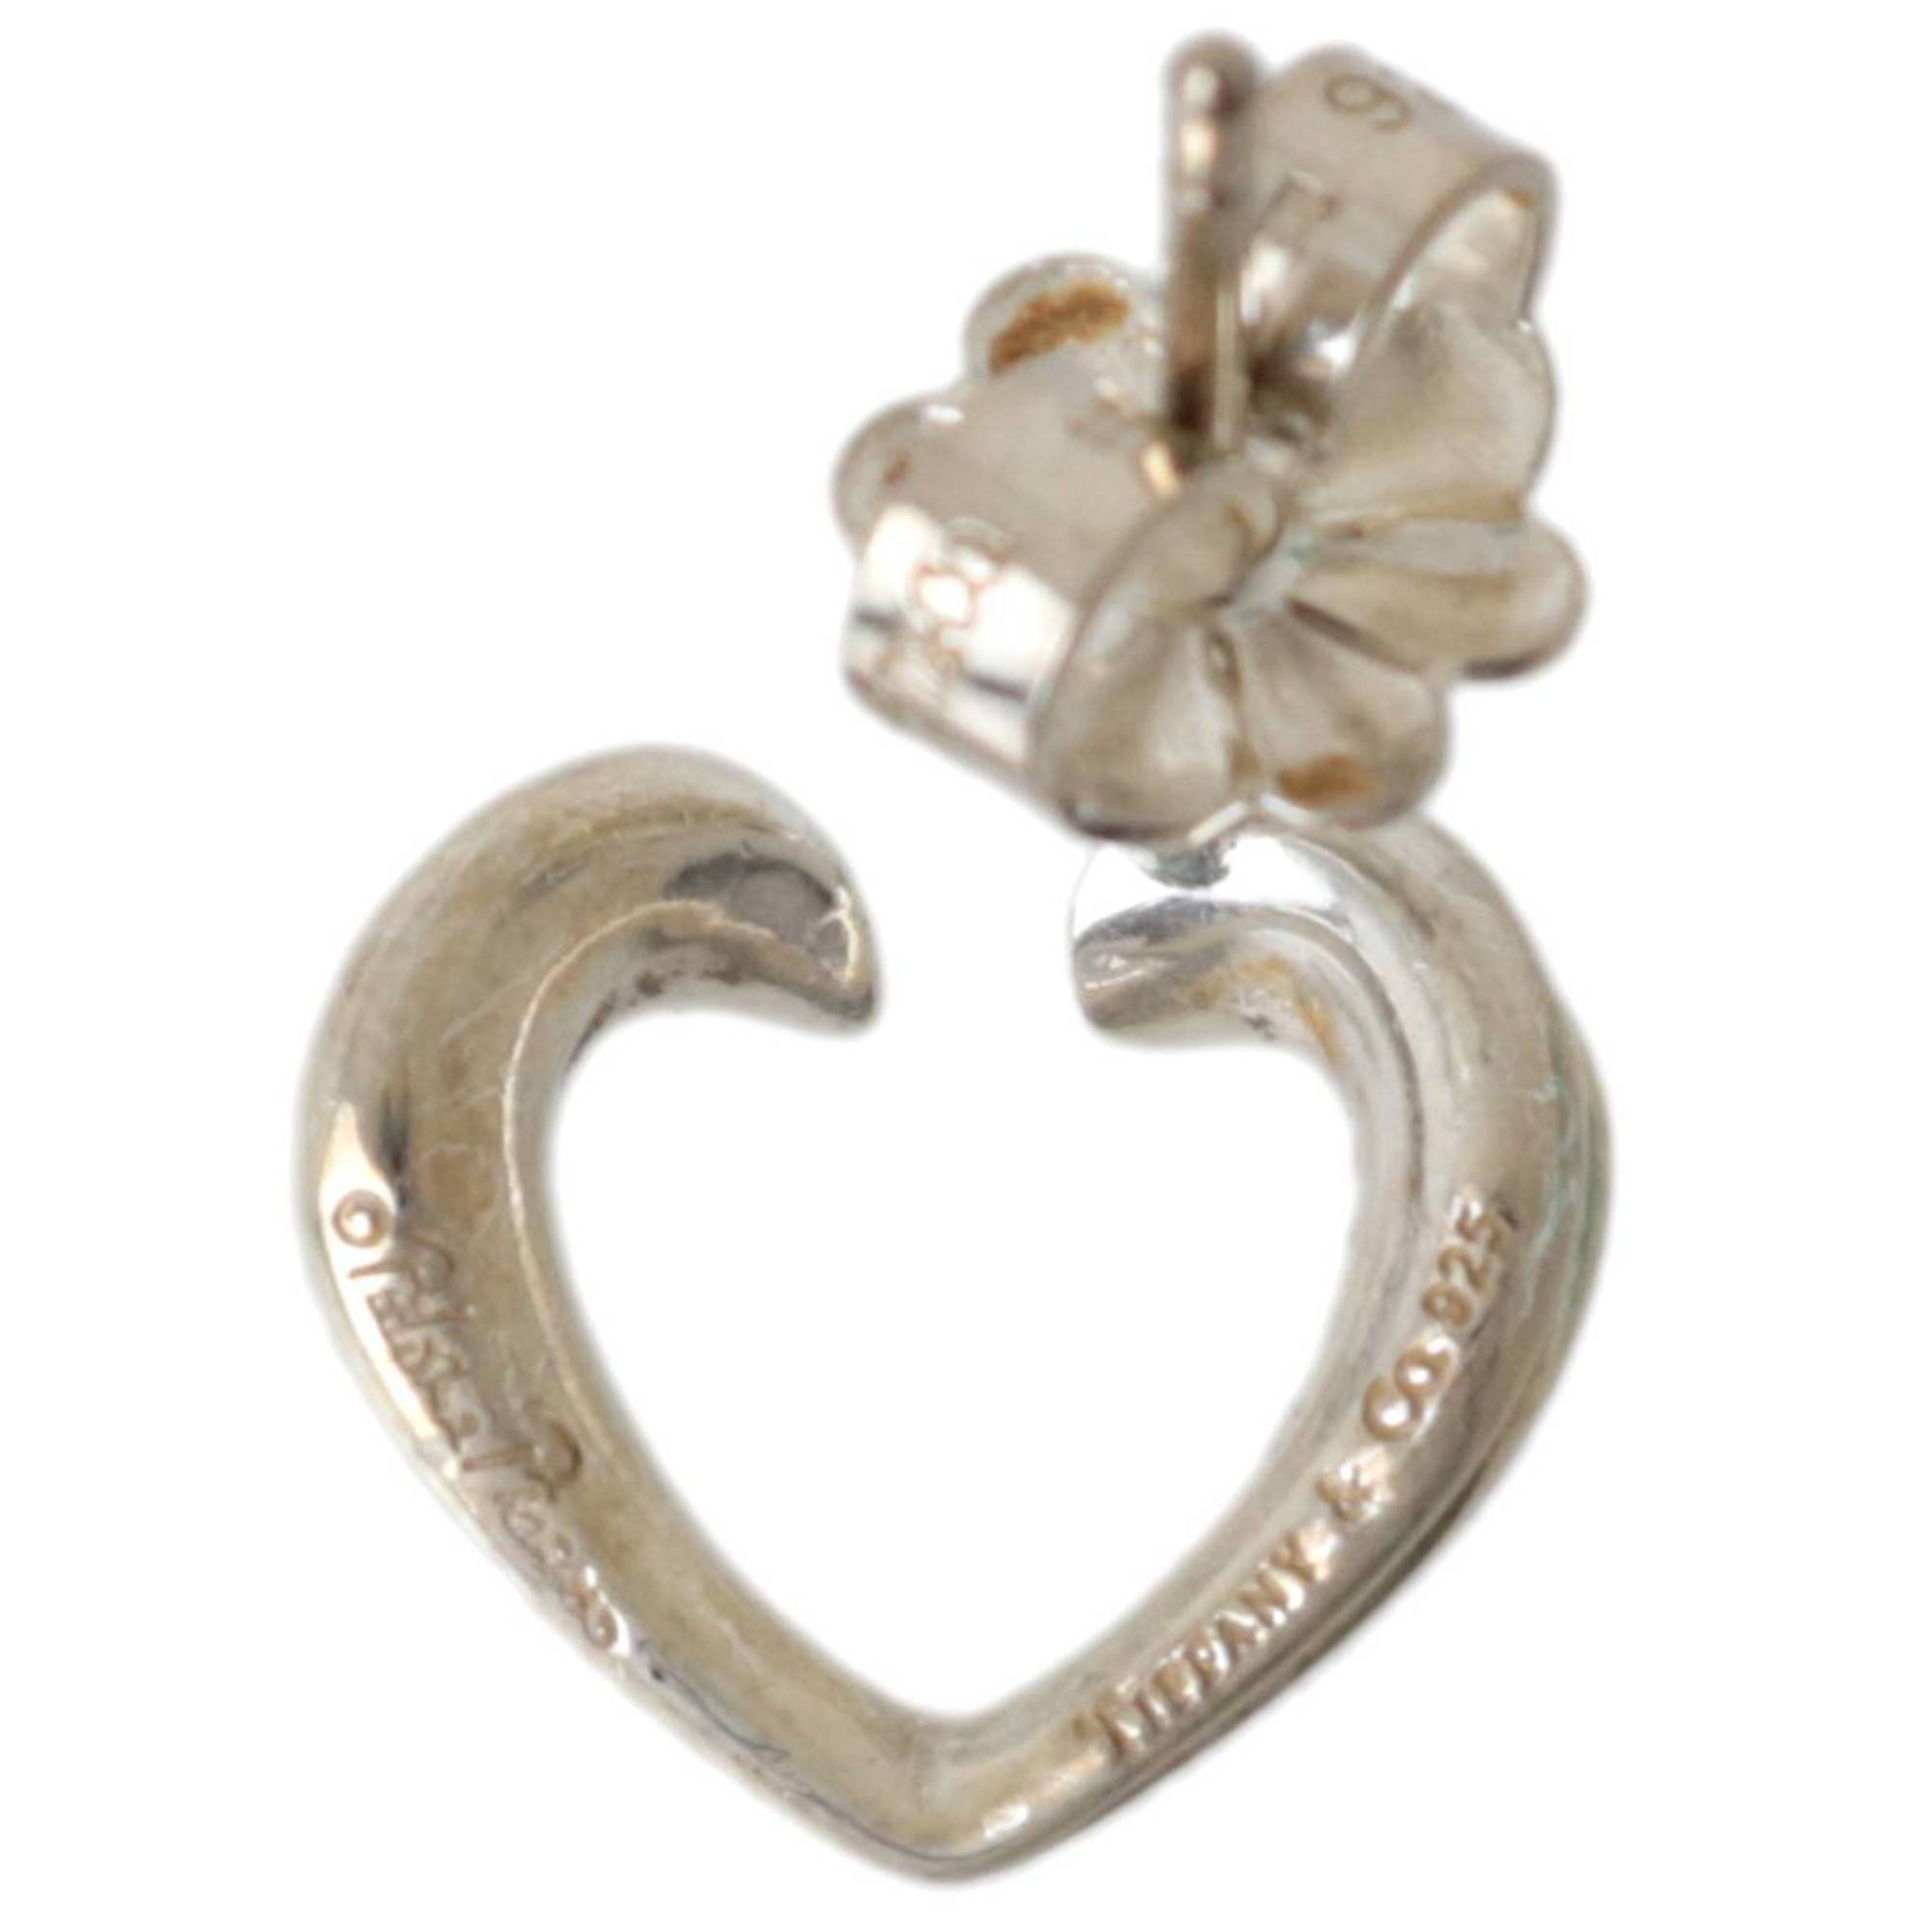 Tiffany & Co. / Paloma Picasso Heart Motif Earrings Sterling Silver